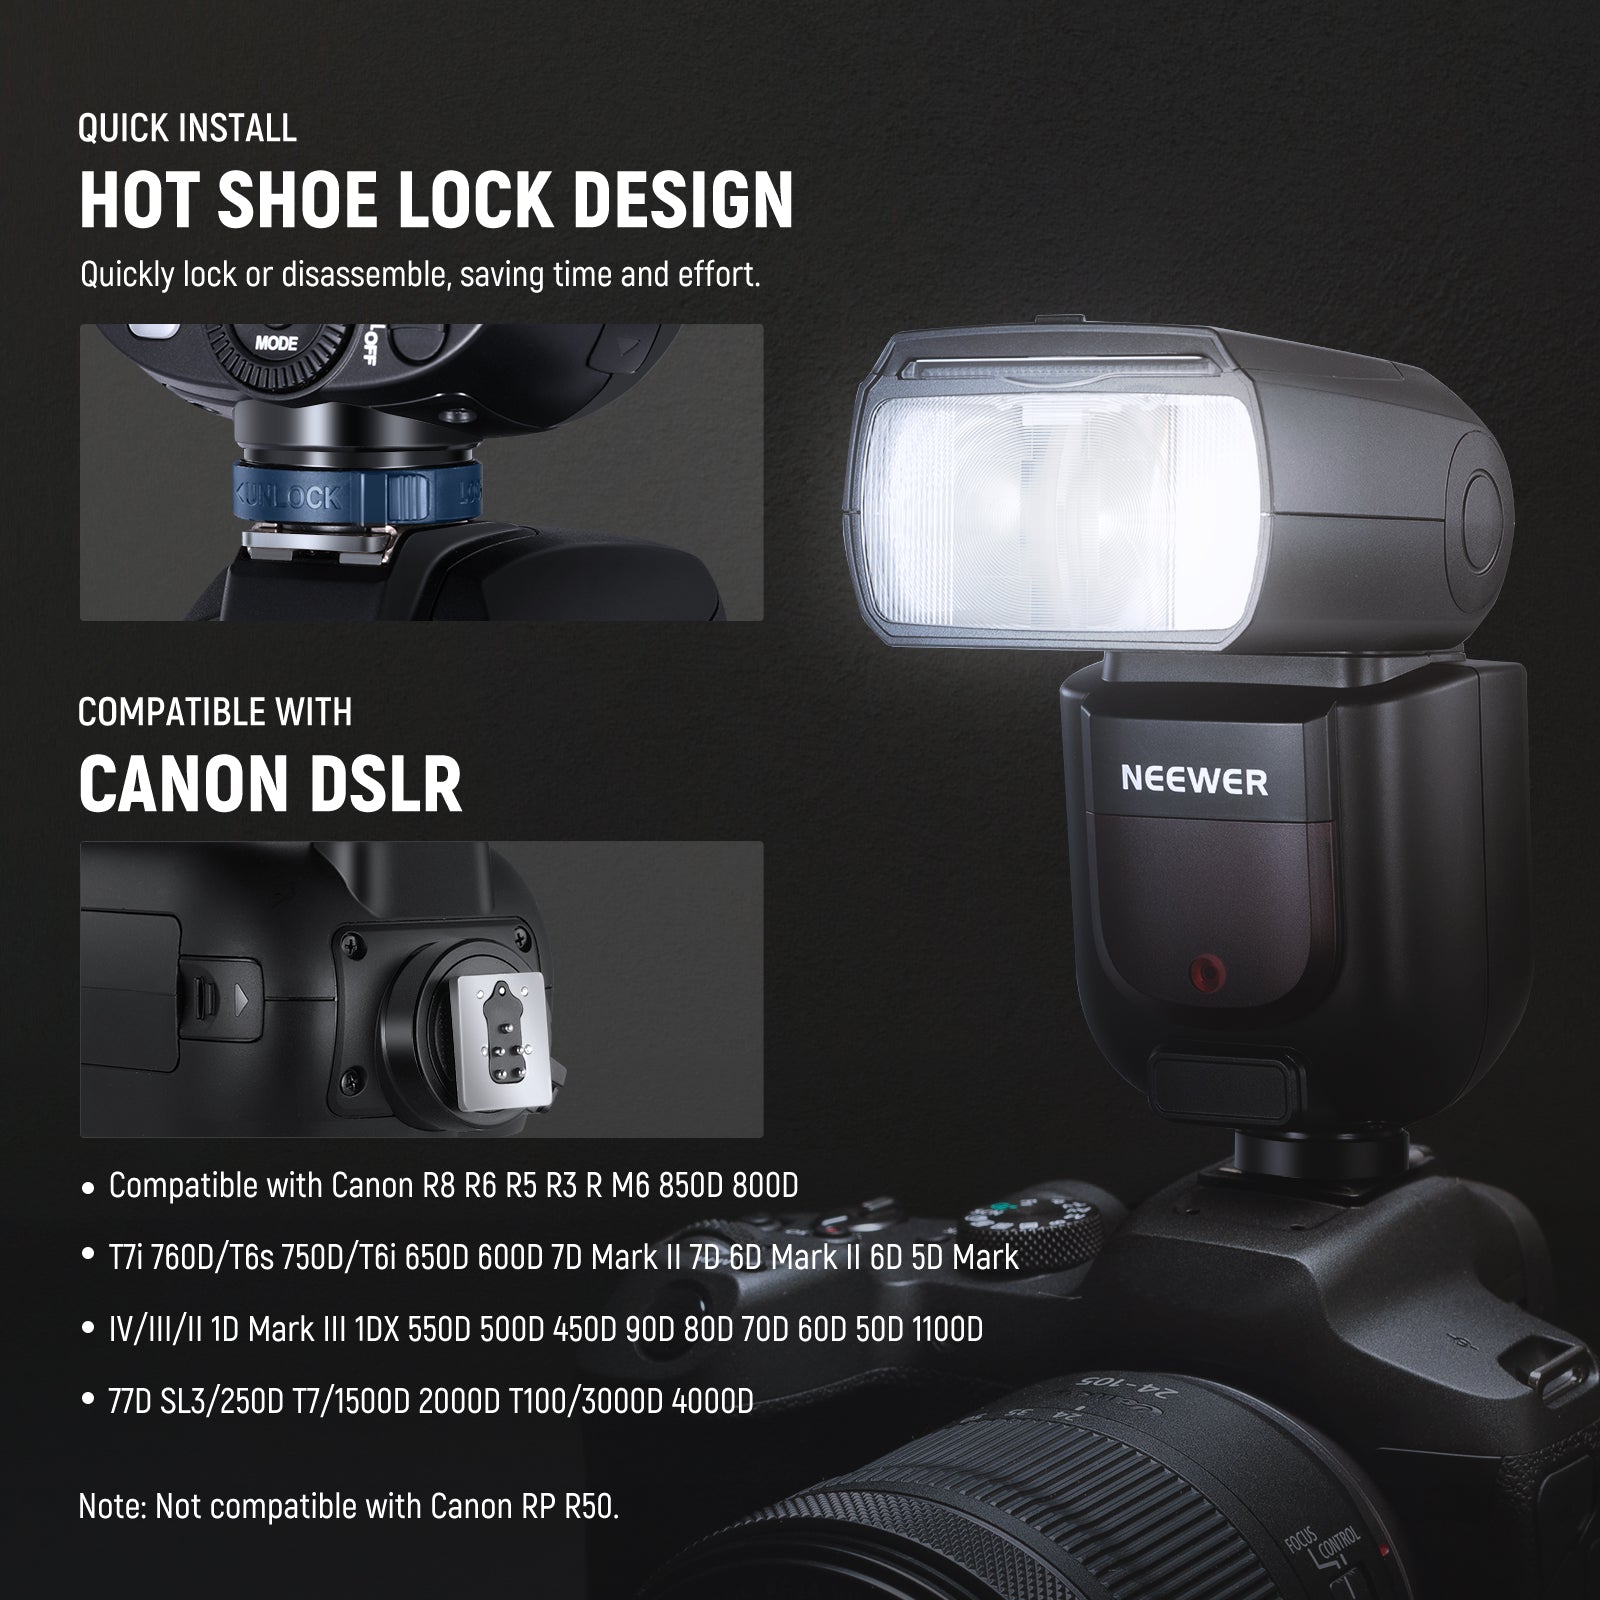 NEEWER Z760-C TTL Flash Speedlite For Canon NEEWER